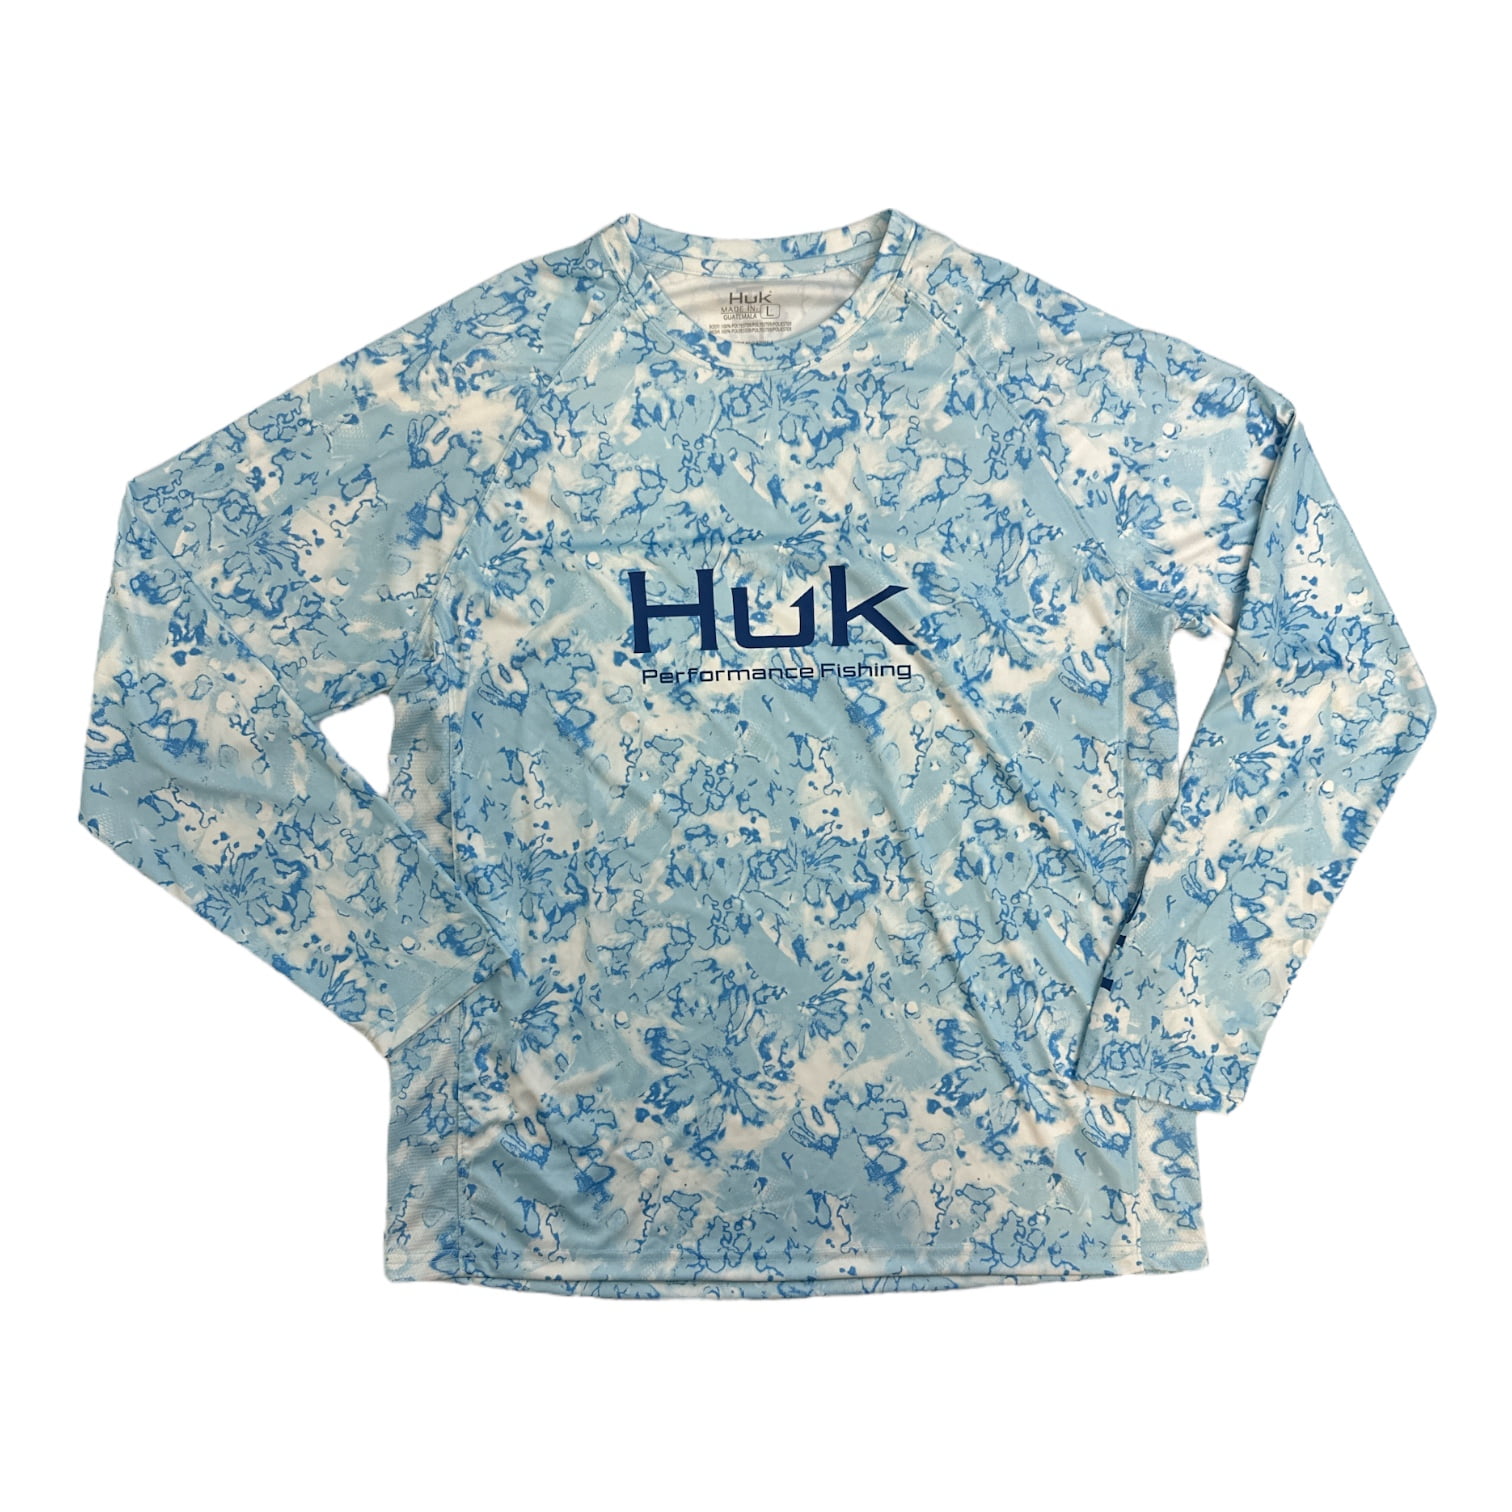 Men's Huk Fin America Fade Pursuit Long Sleeve Shirt, Large, Crystal Blue